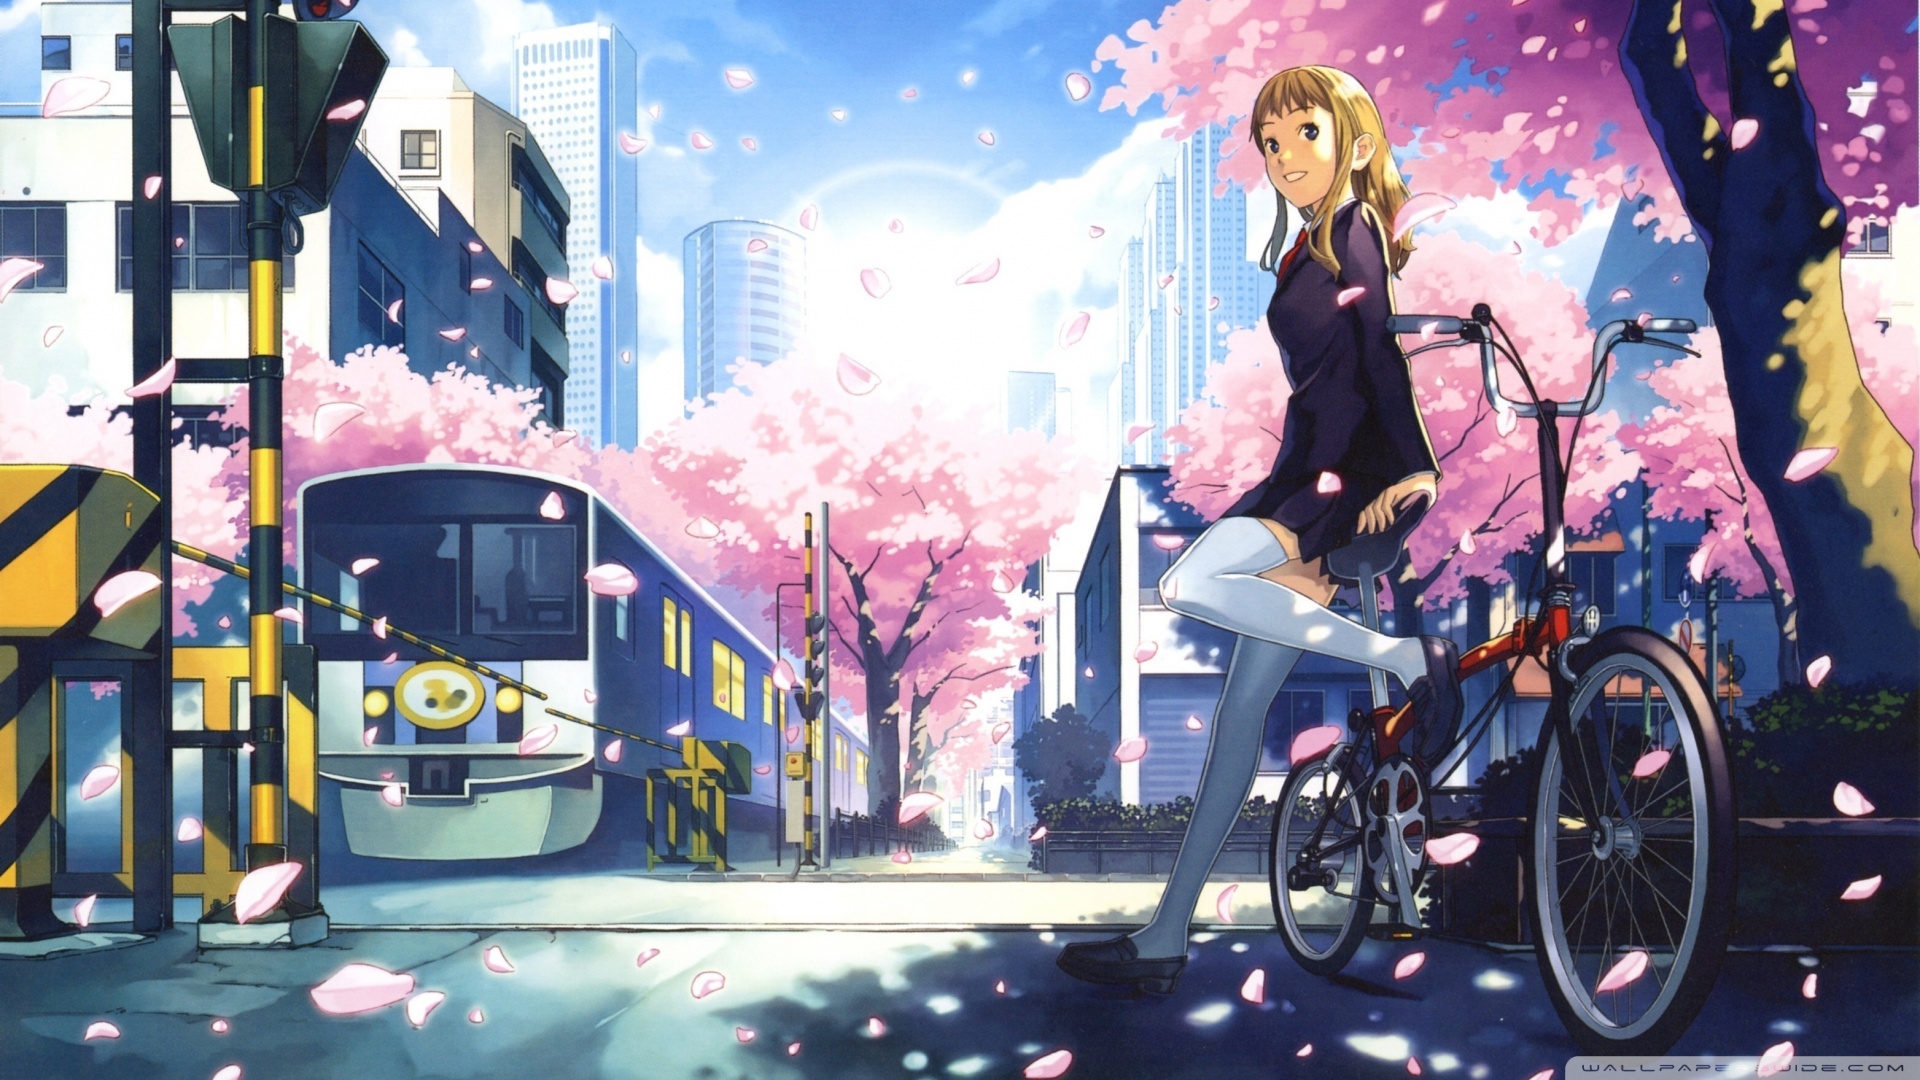 Anime wallpapers full hd, hdtv, fhd, 1080p, desktop backgrounds hd